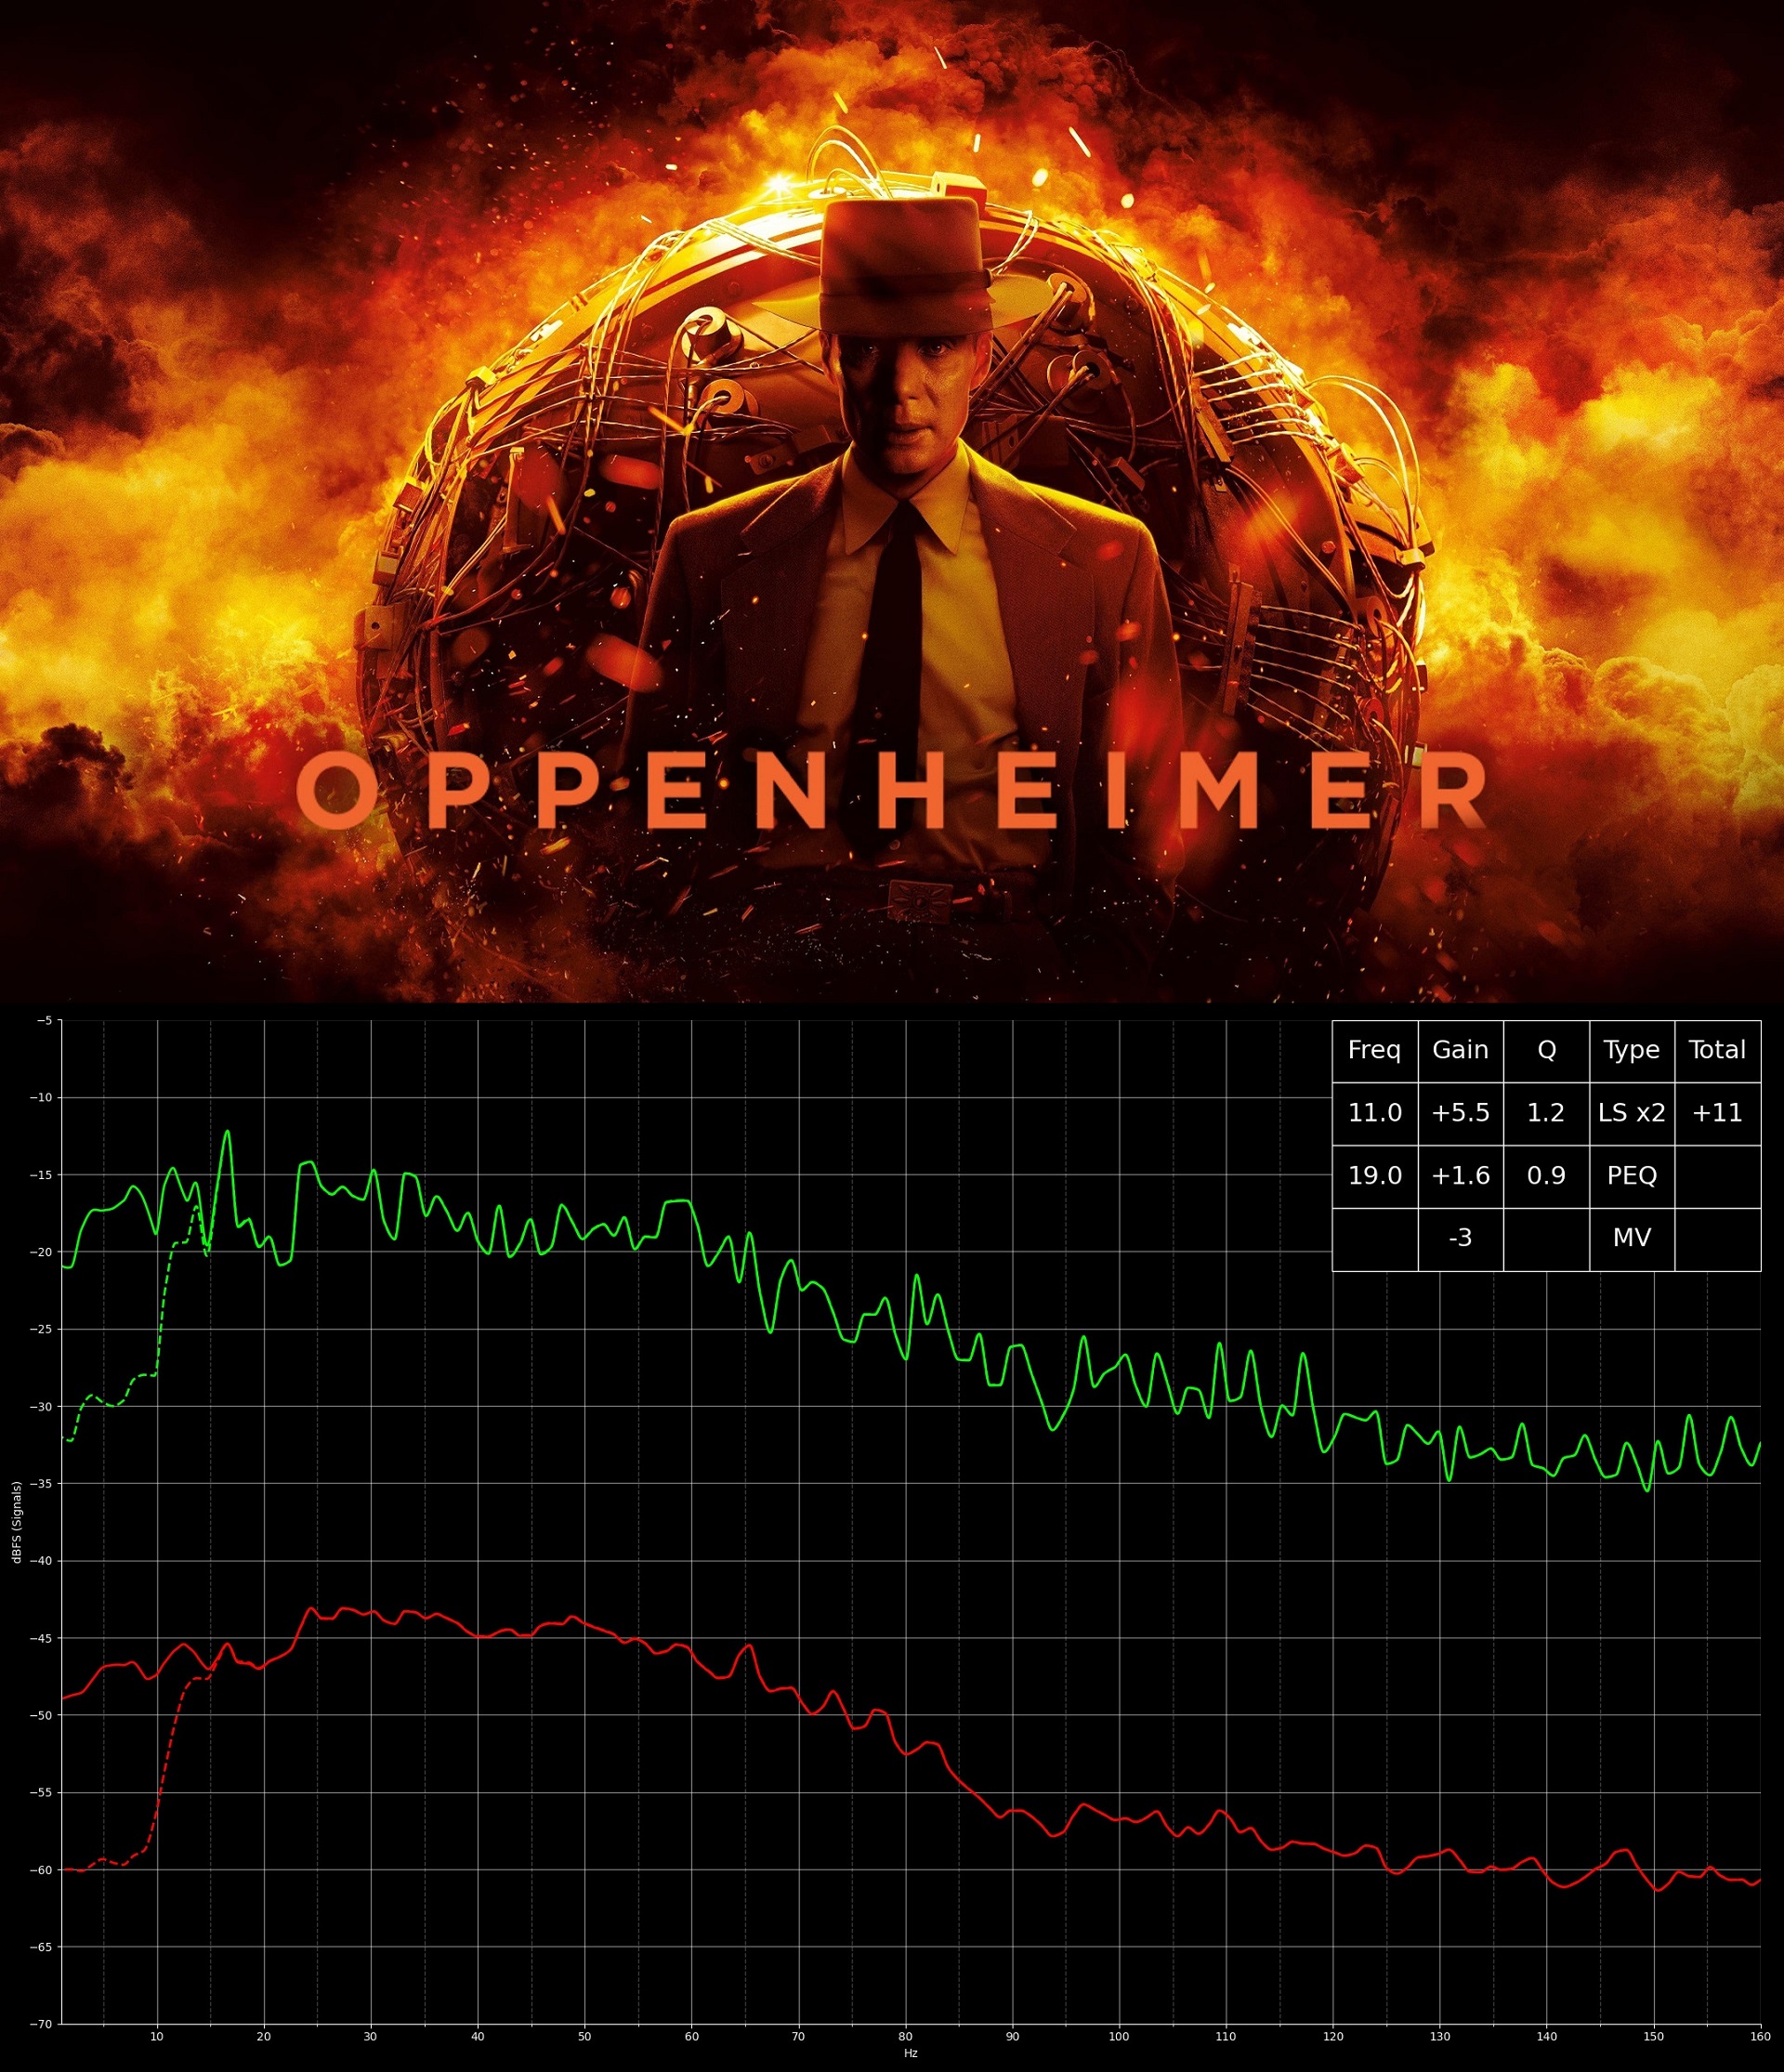 Christopher Nolan · Oppenheimer (4K Ultra HD/BD) [Limited